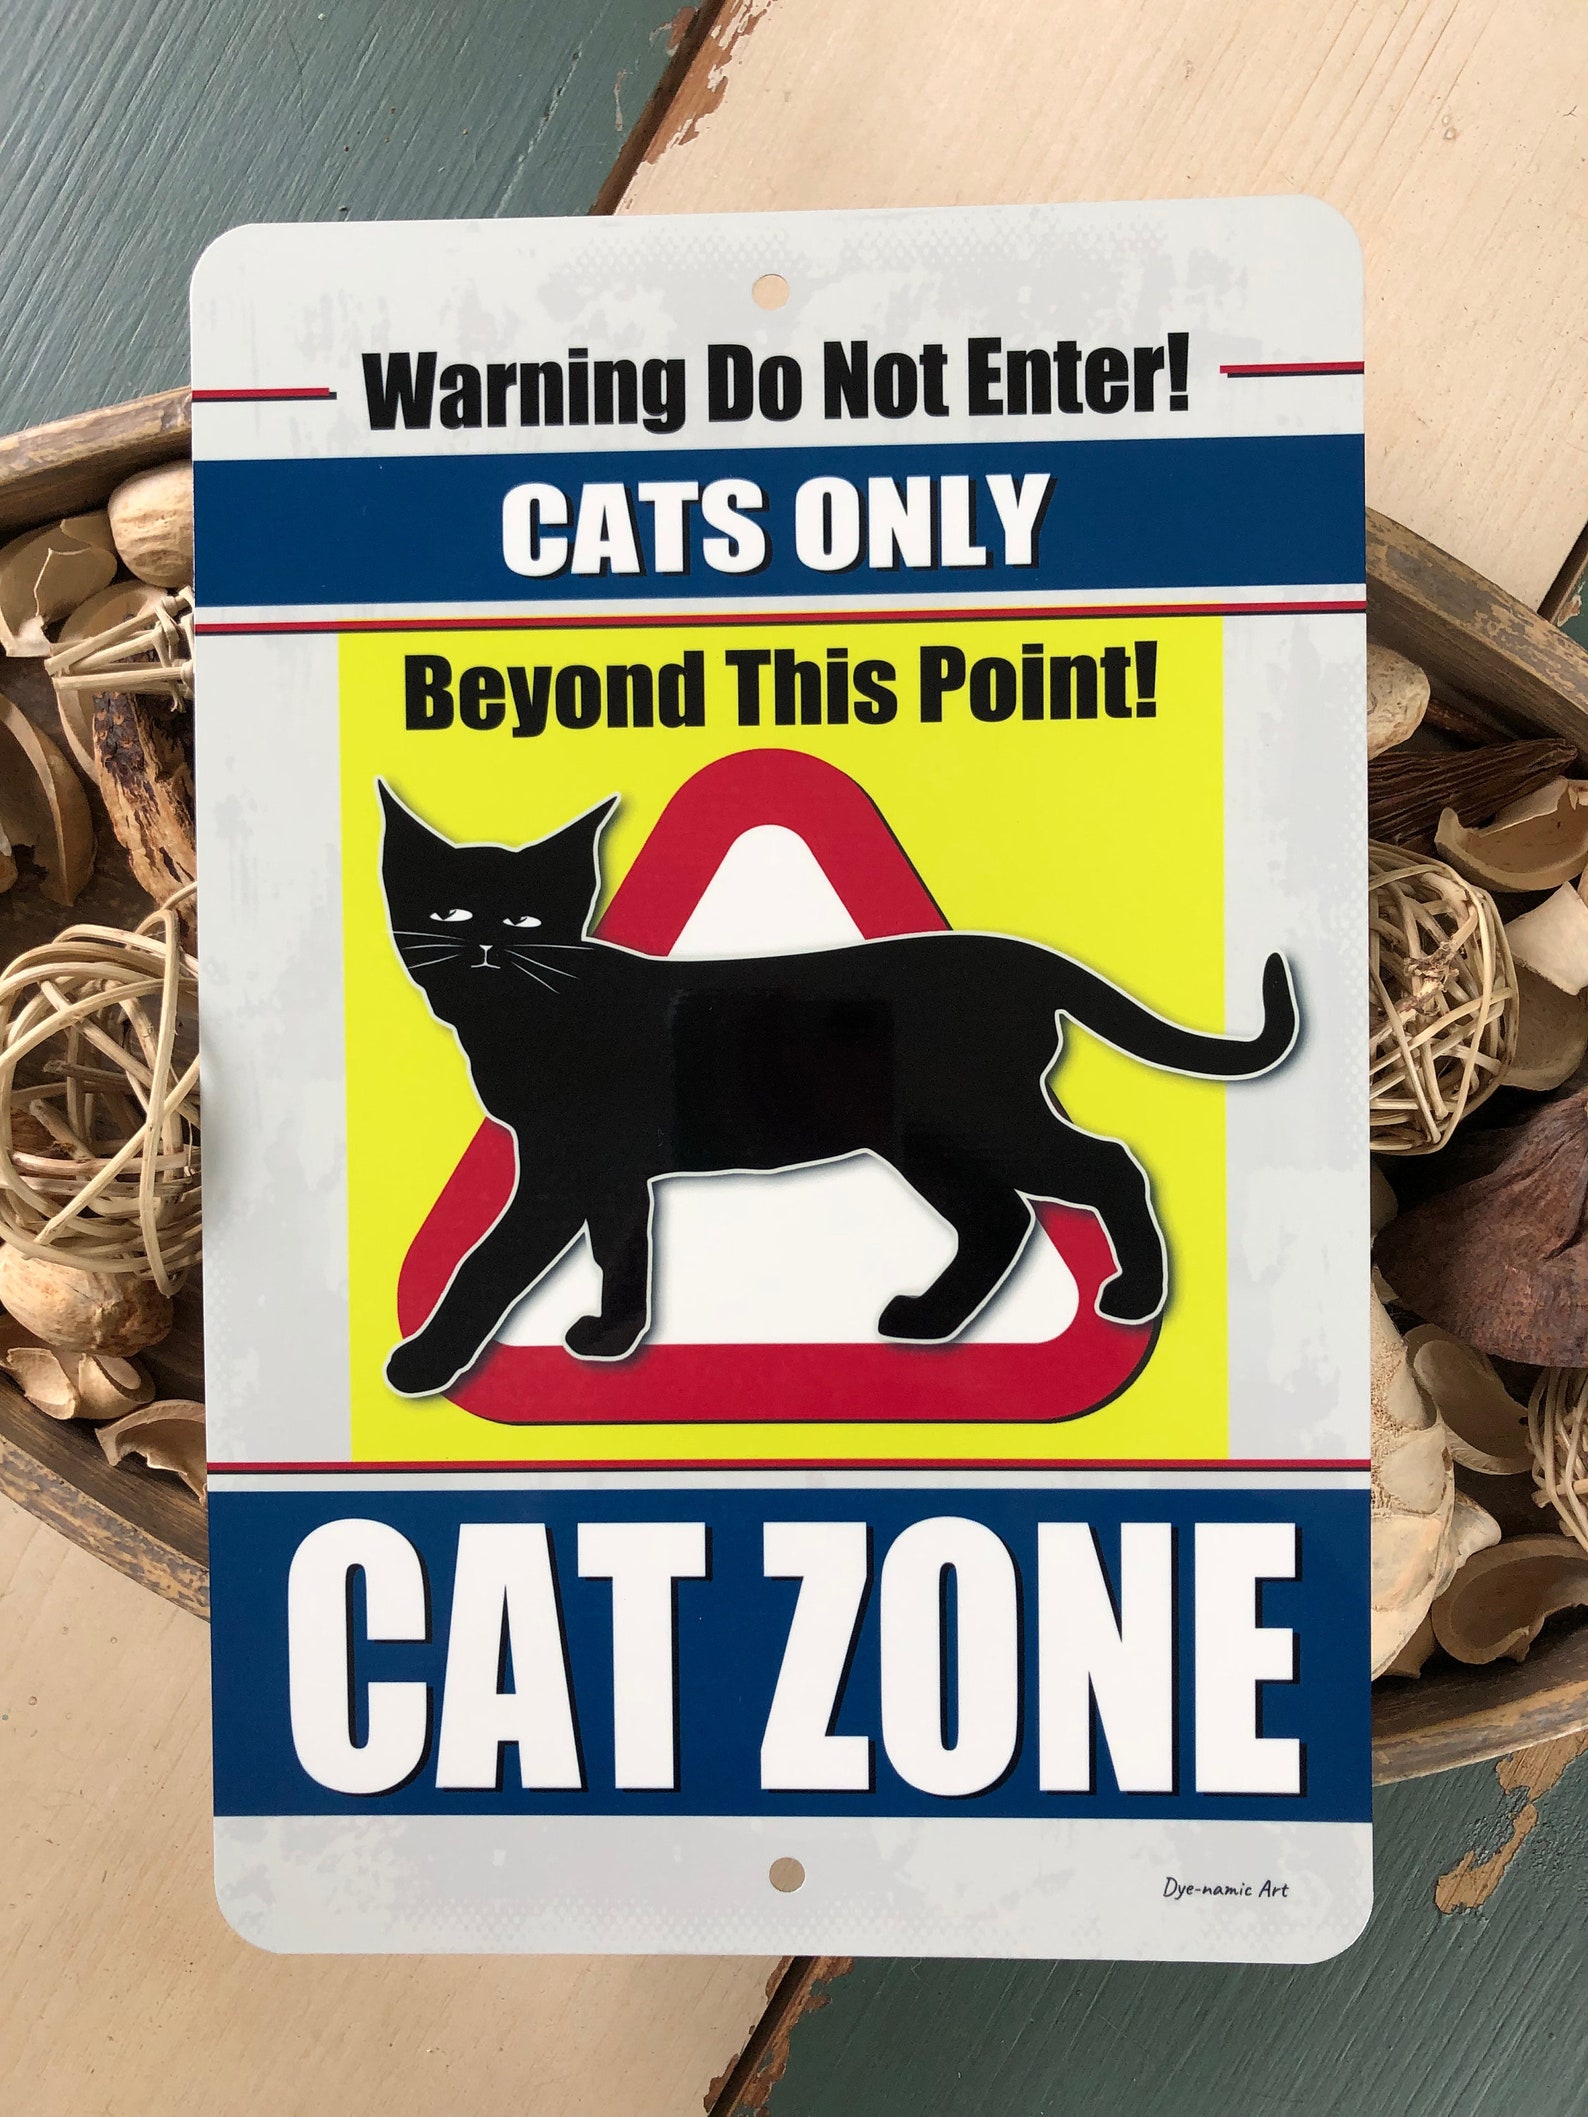 Pet rules. Cats Zone табличка. Cat Zone. Кэт зона. Кэт зона табличкой.